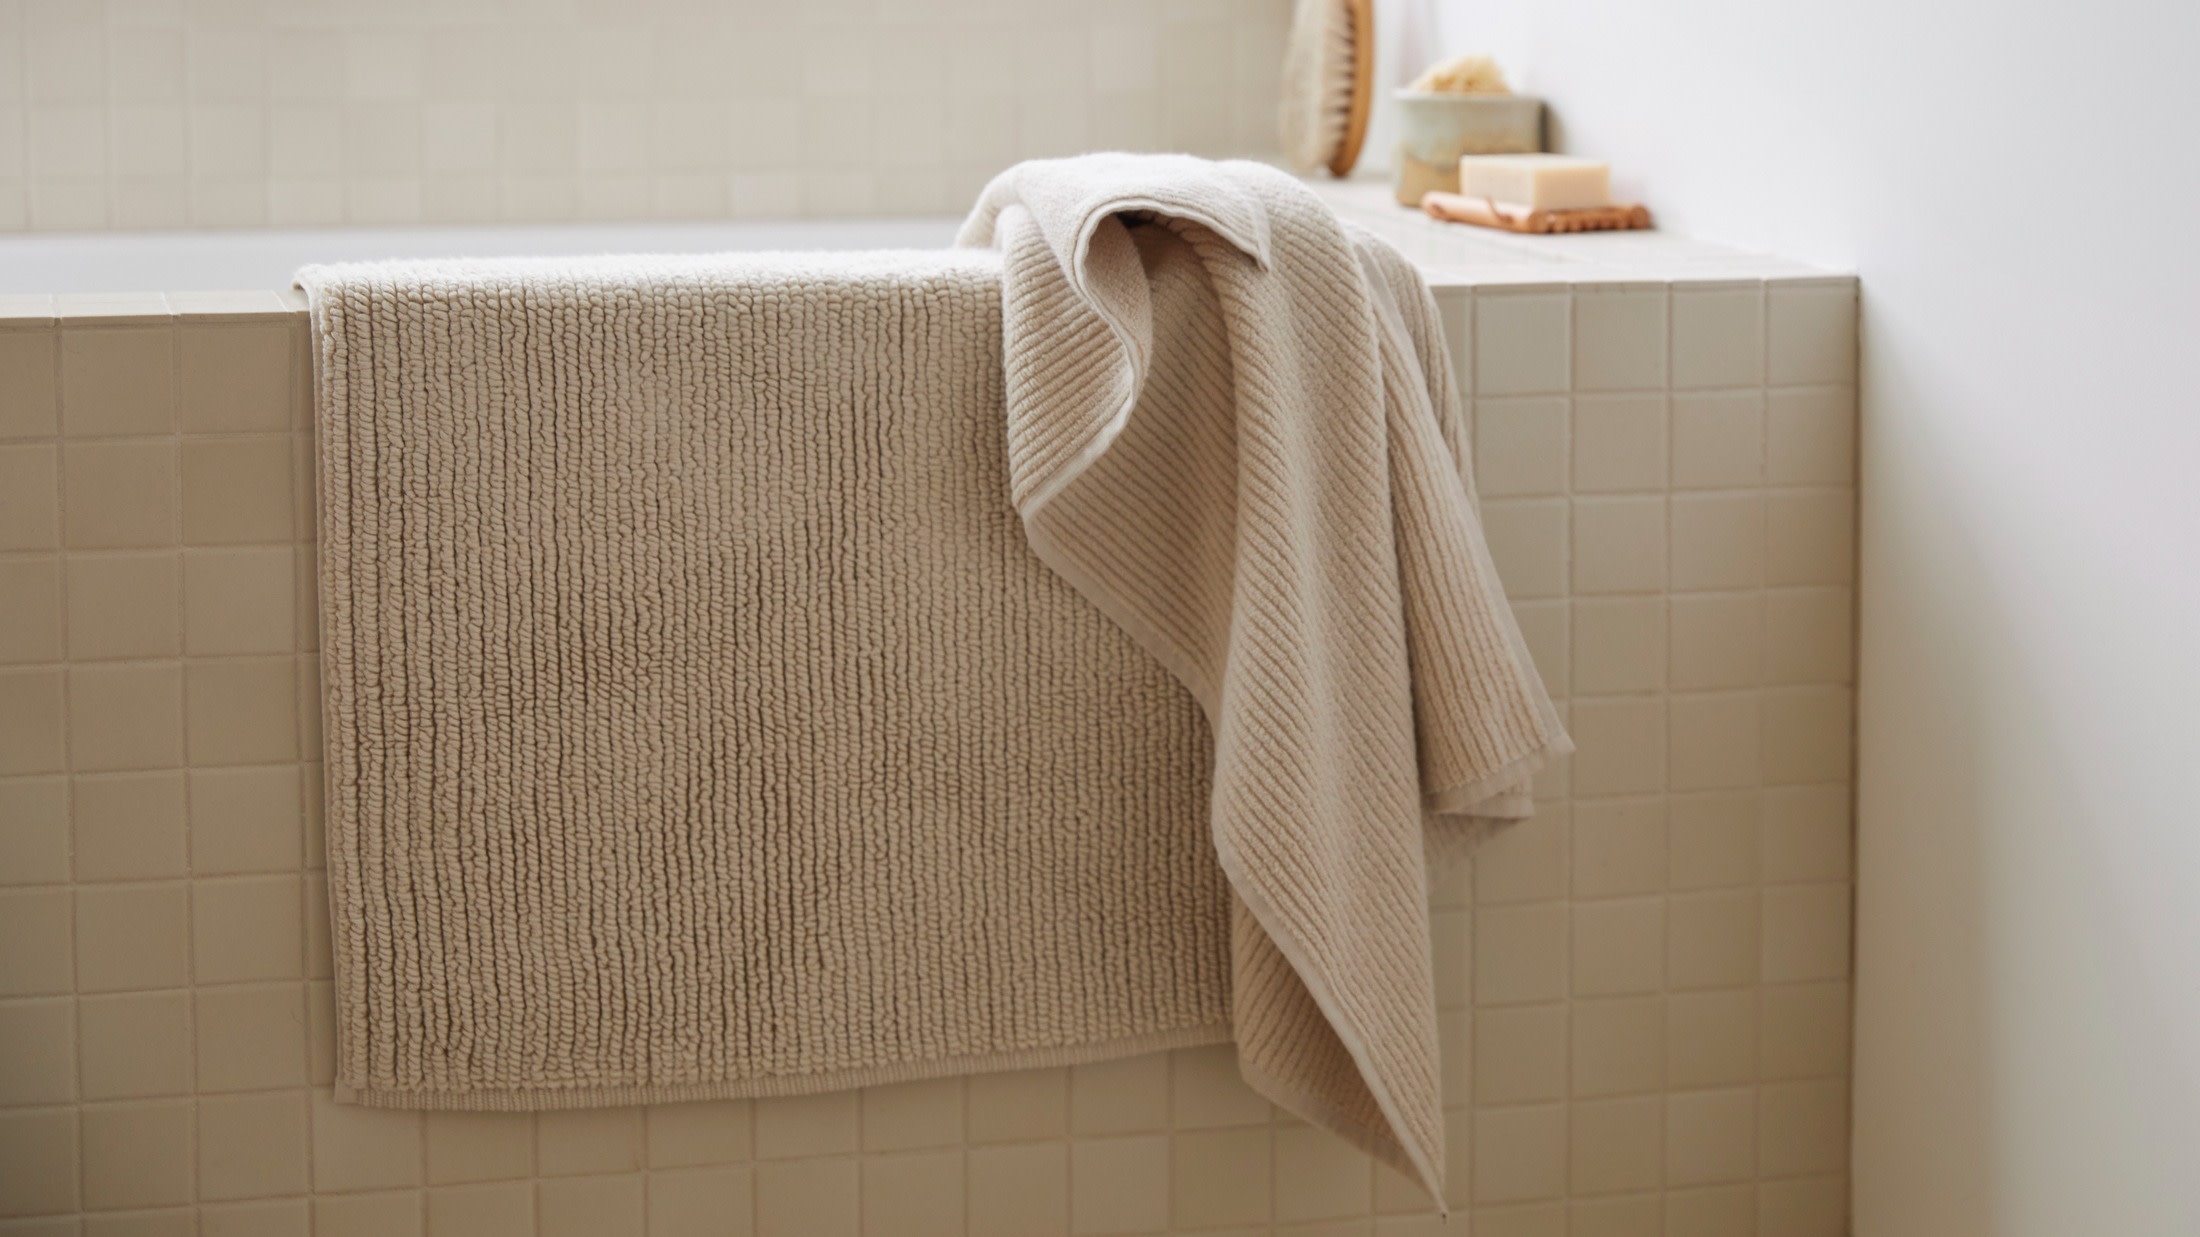 A bone Soft Rib Tub Mat and Bath Towel hanging over the side of a tiled bath tub